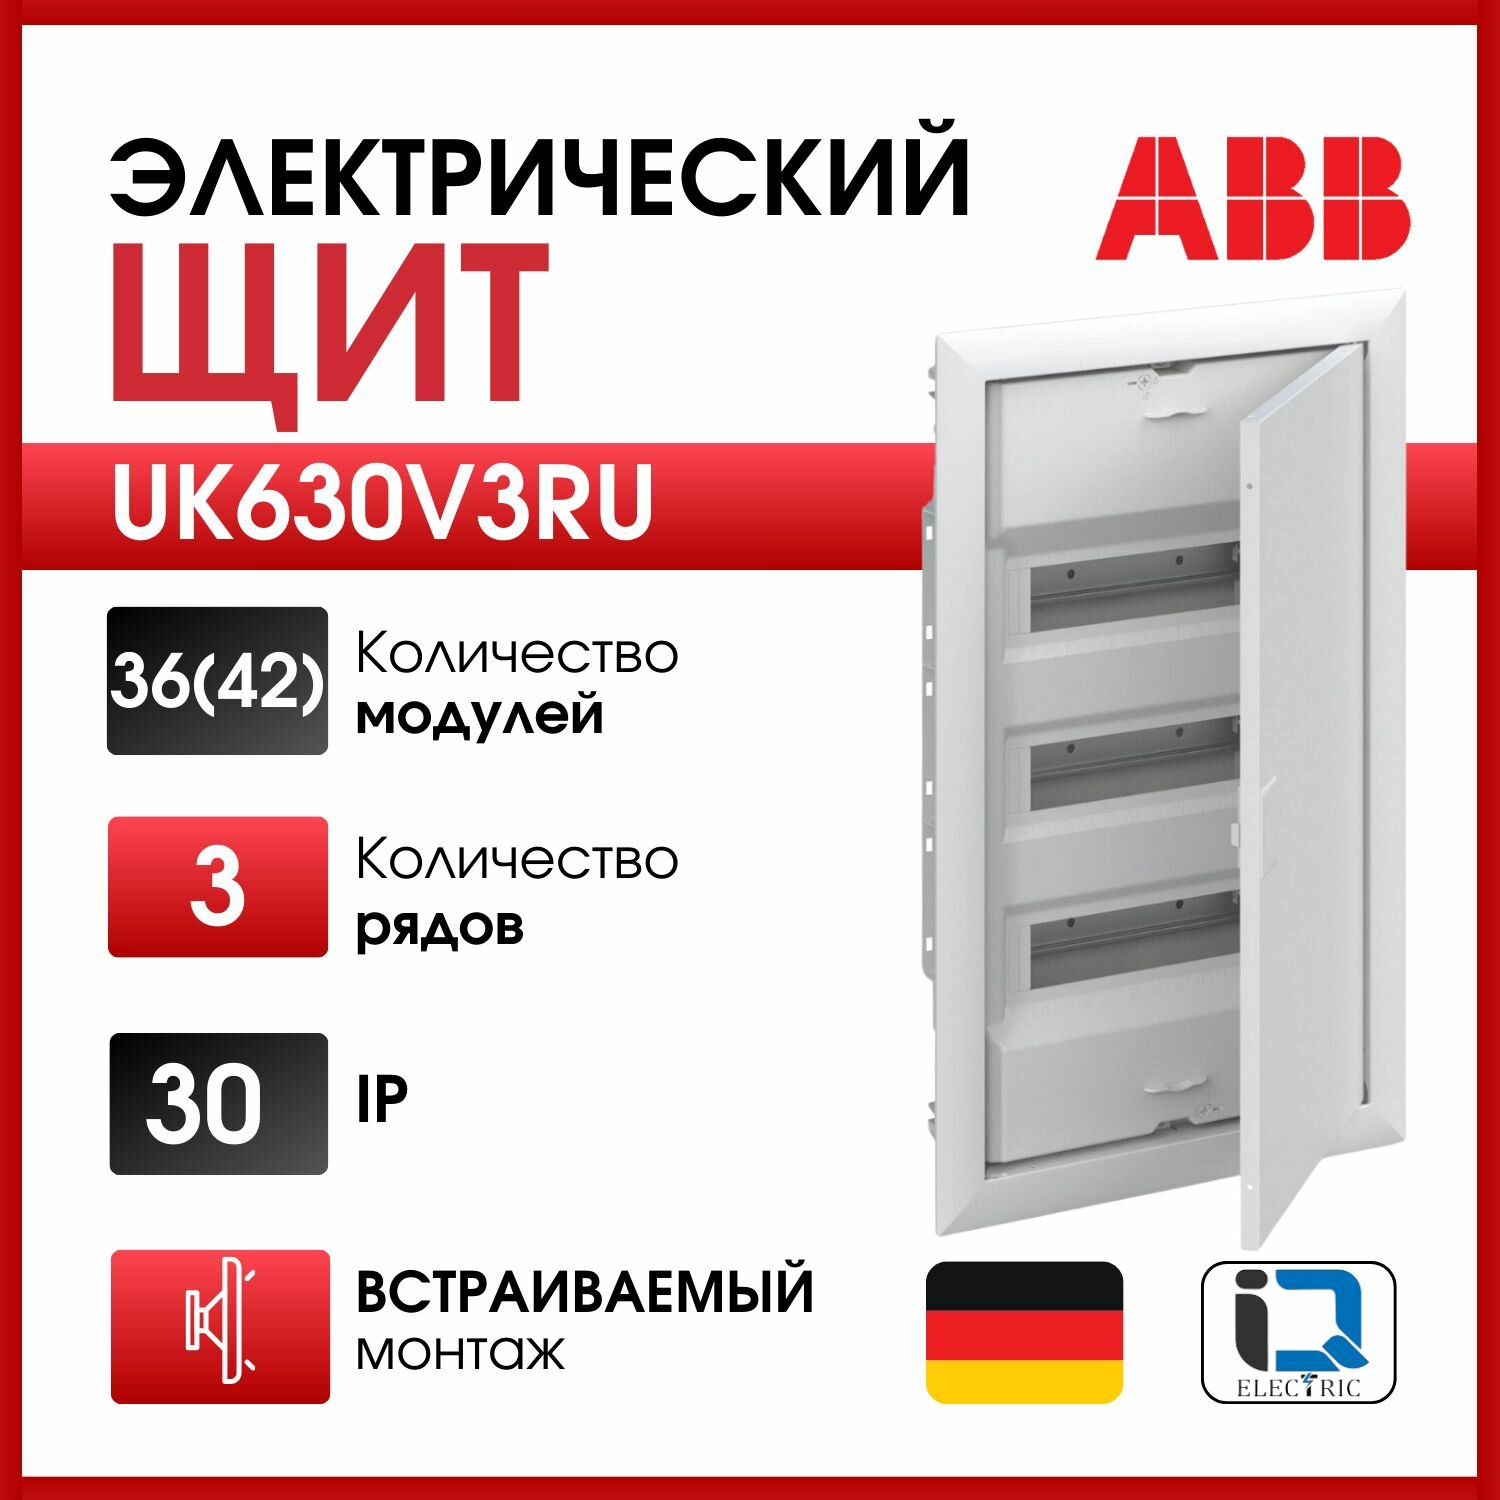 Шкаф в нишу ABB UK630V3RU 36 (6) мод (с винтовыми клеммами N/PE) 2CPX077857R9999 белый